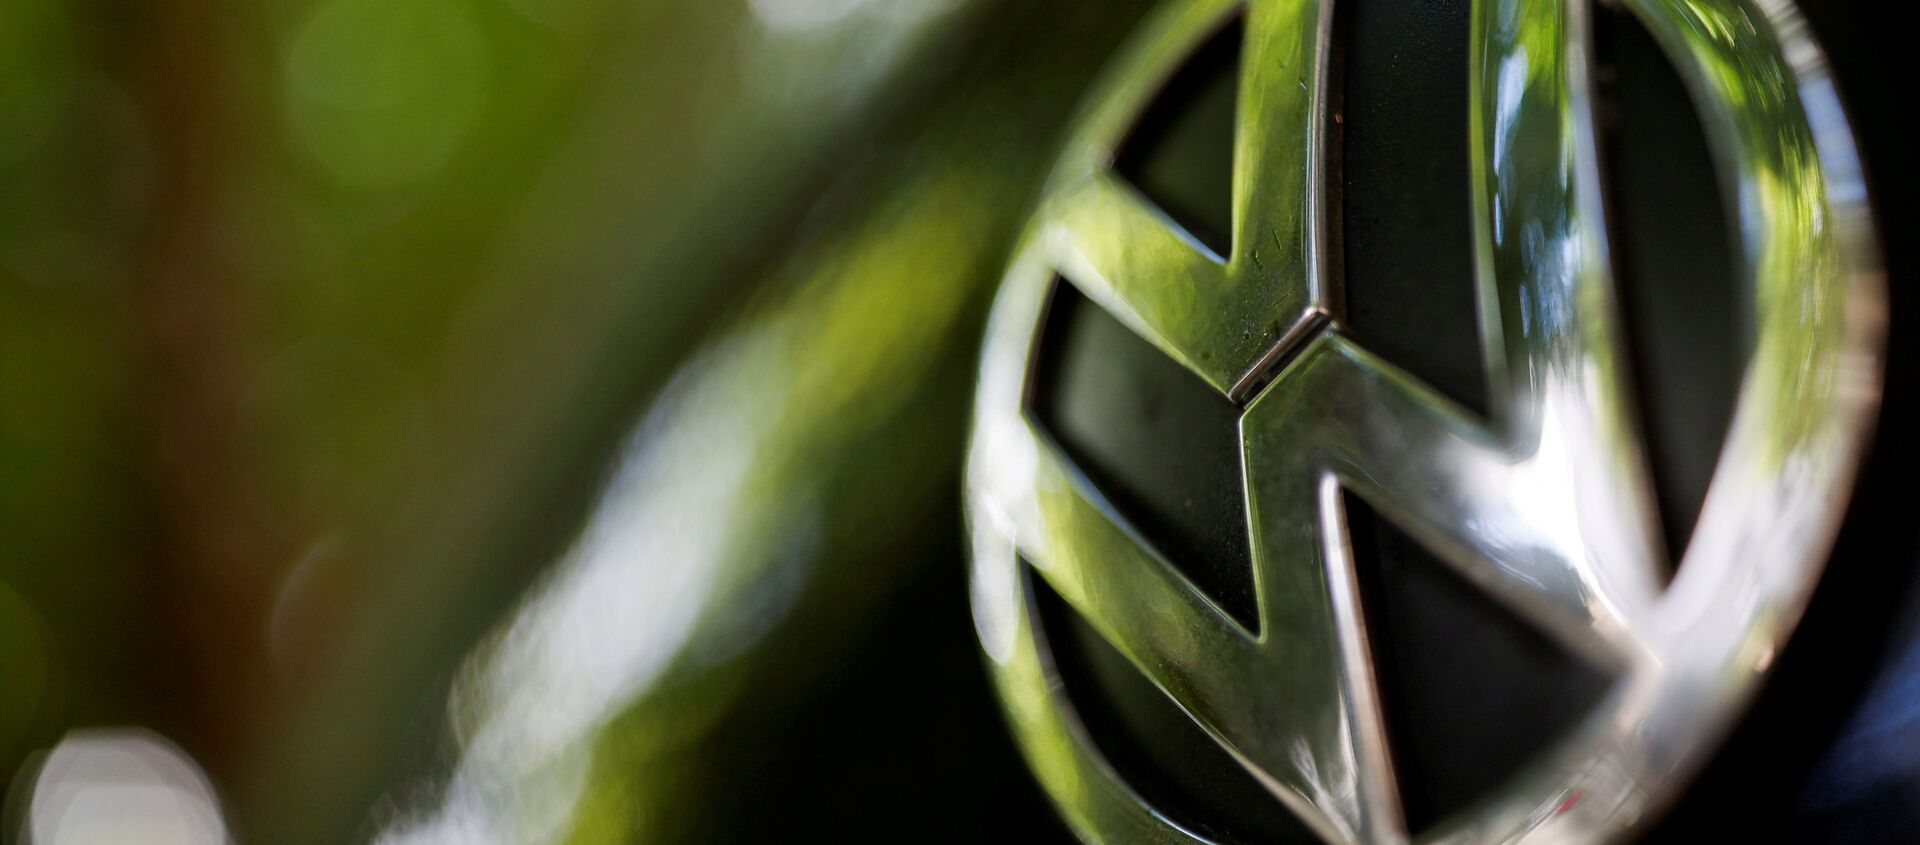 A logo of German carmaker Volkswagen is seen on a car parked on a street in Paris, France, July 9, 2020 - Sputnik International, 1920, 28.09.2020